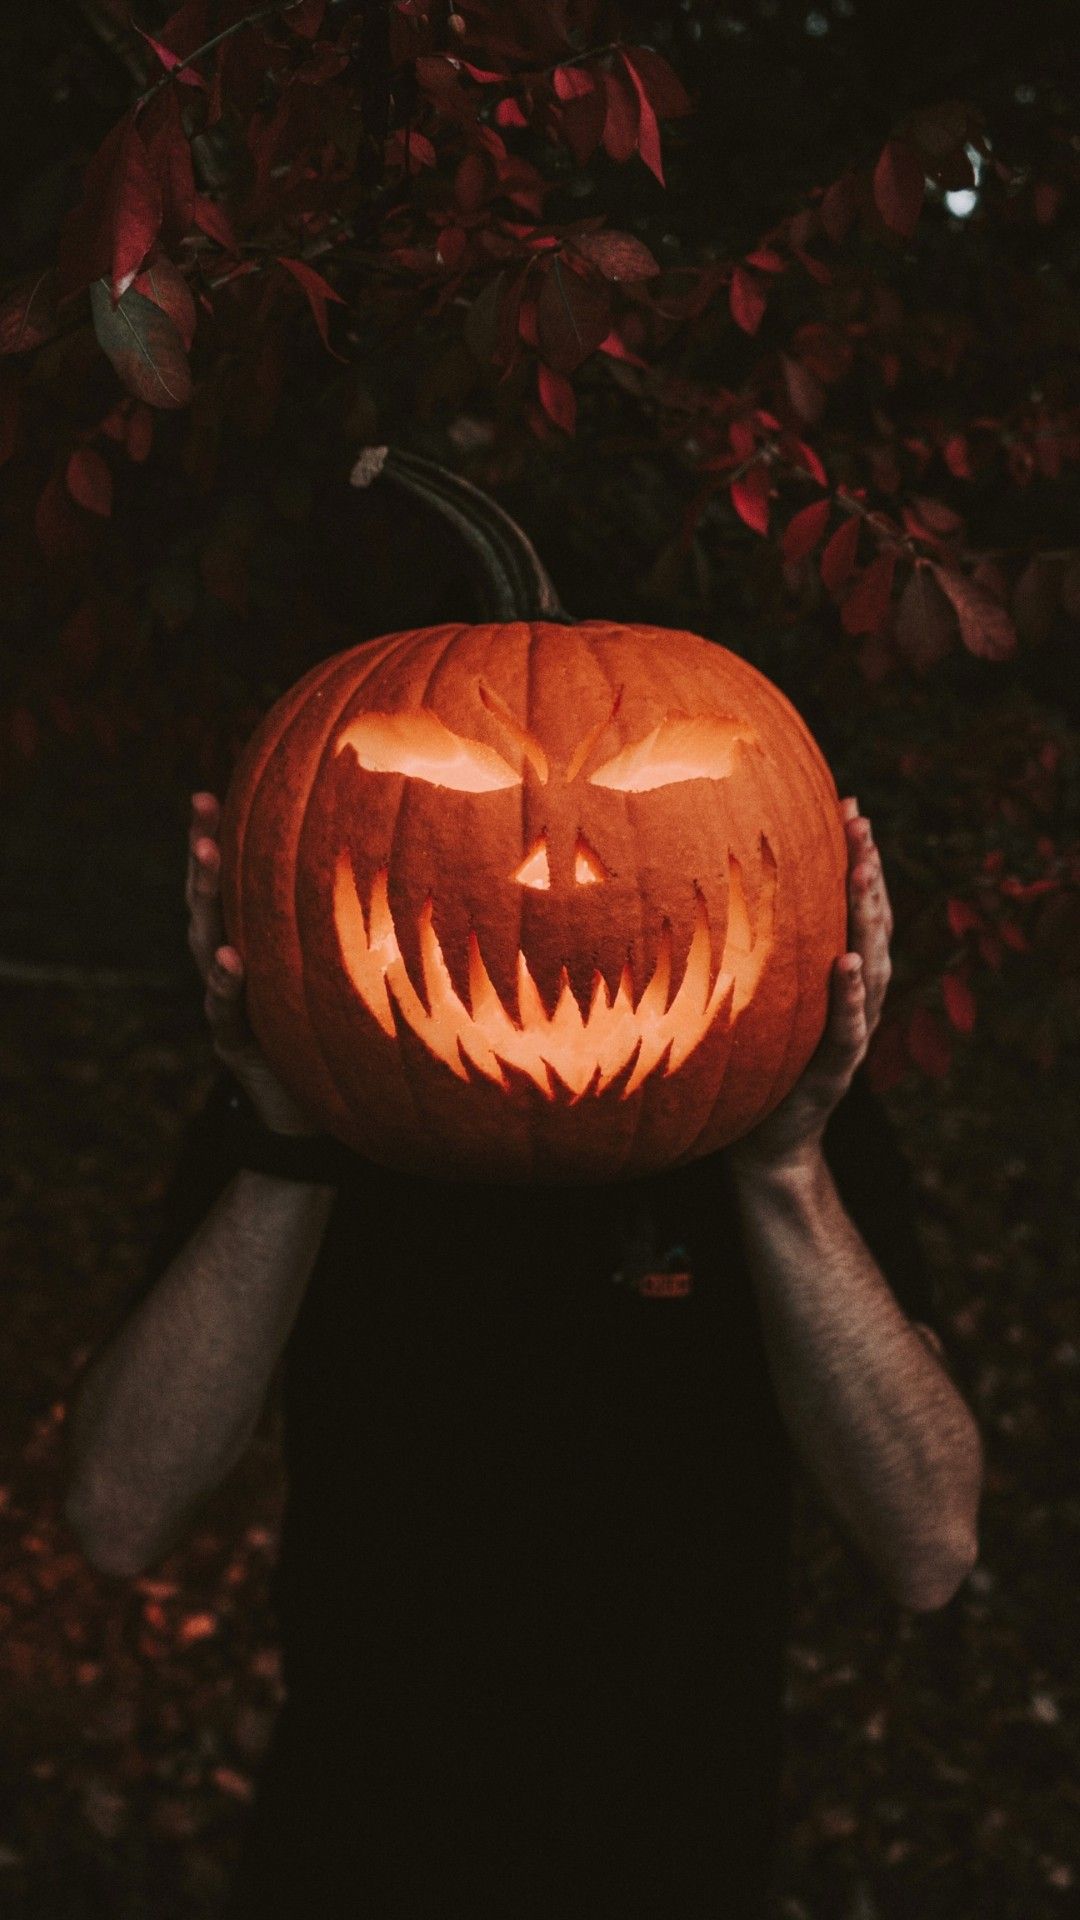 Halloween iPhone wallpaper with a carved pumpkin. - Halloween